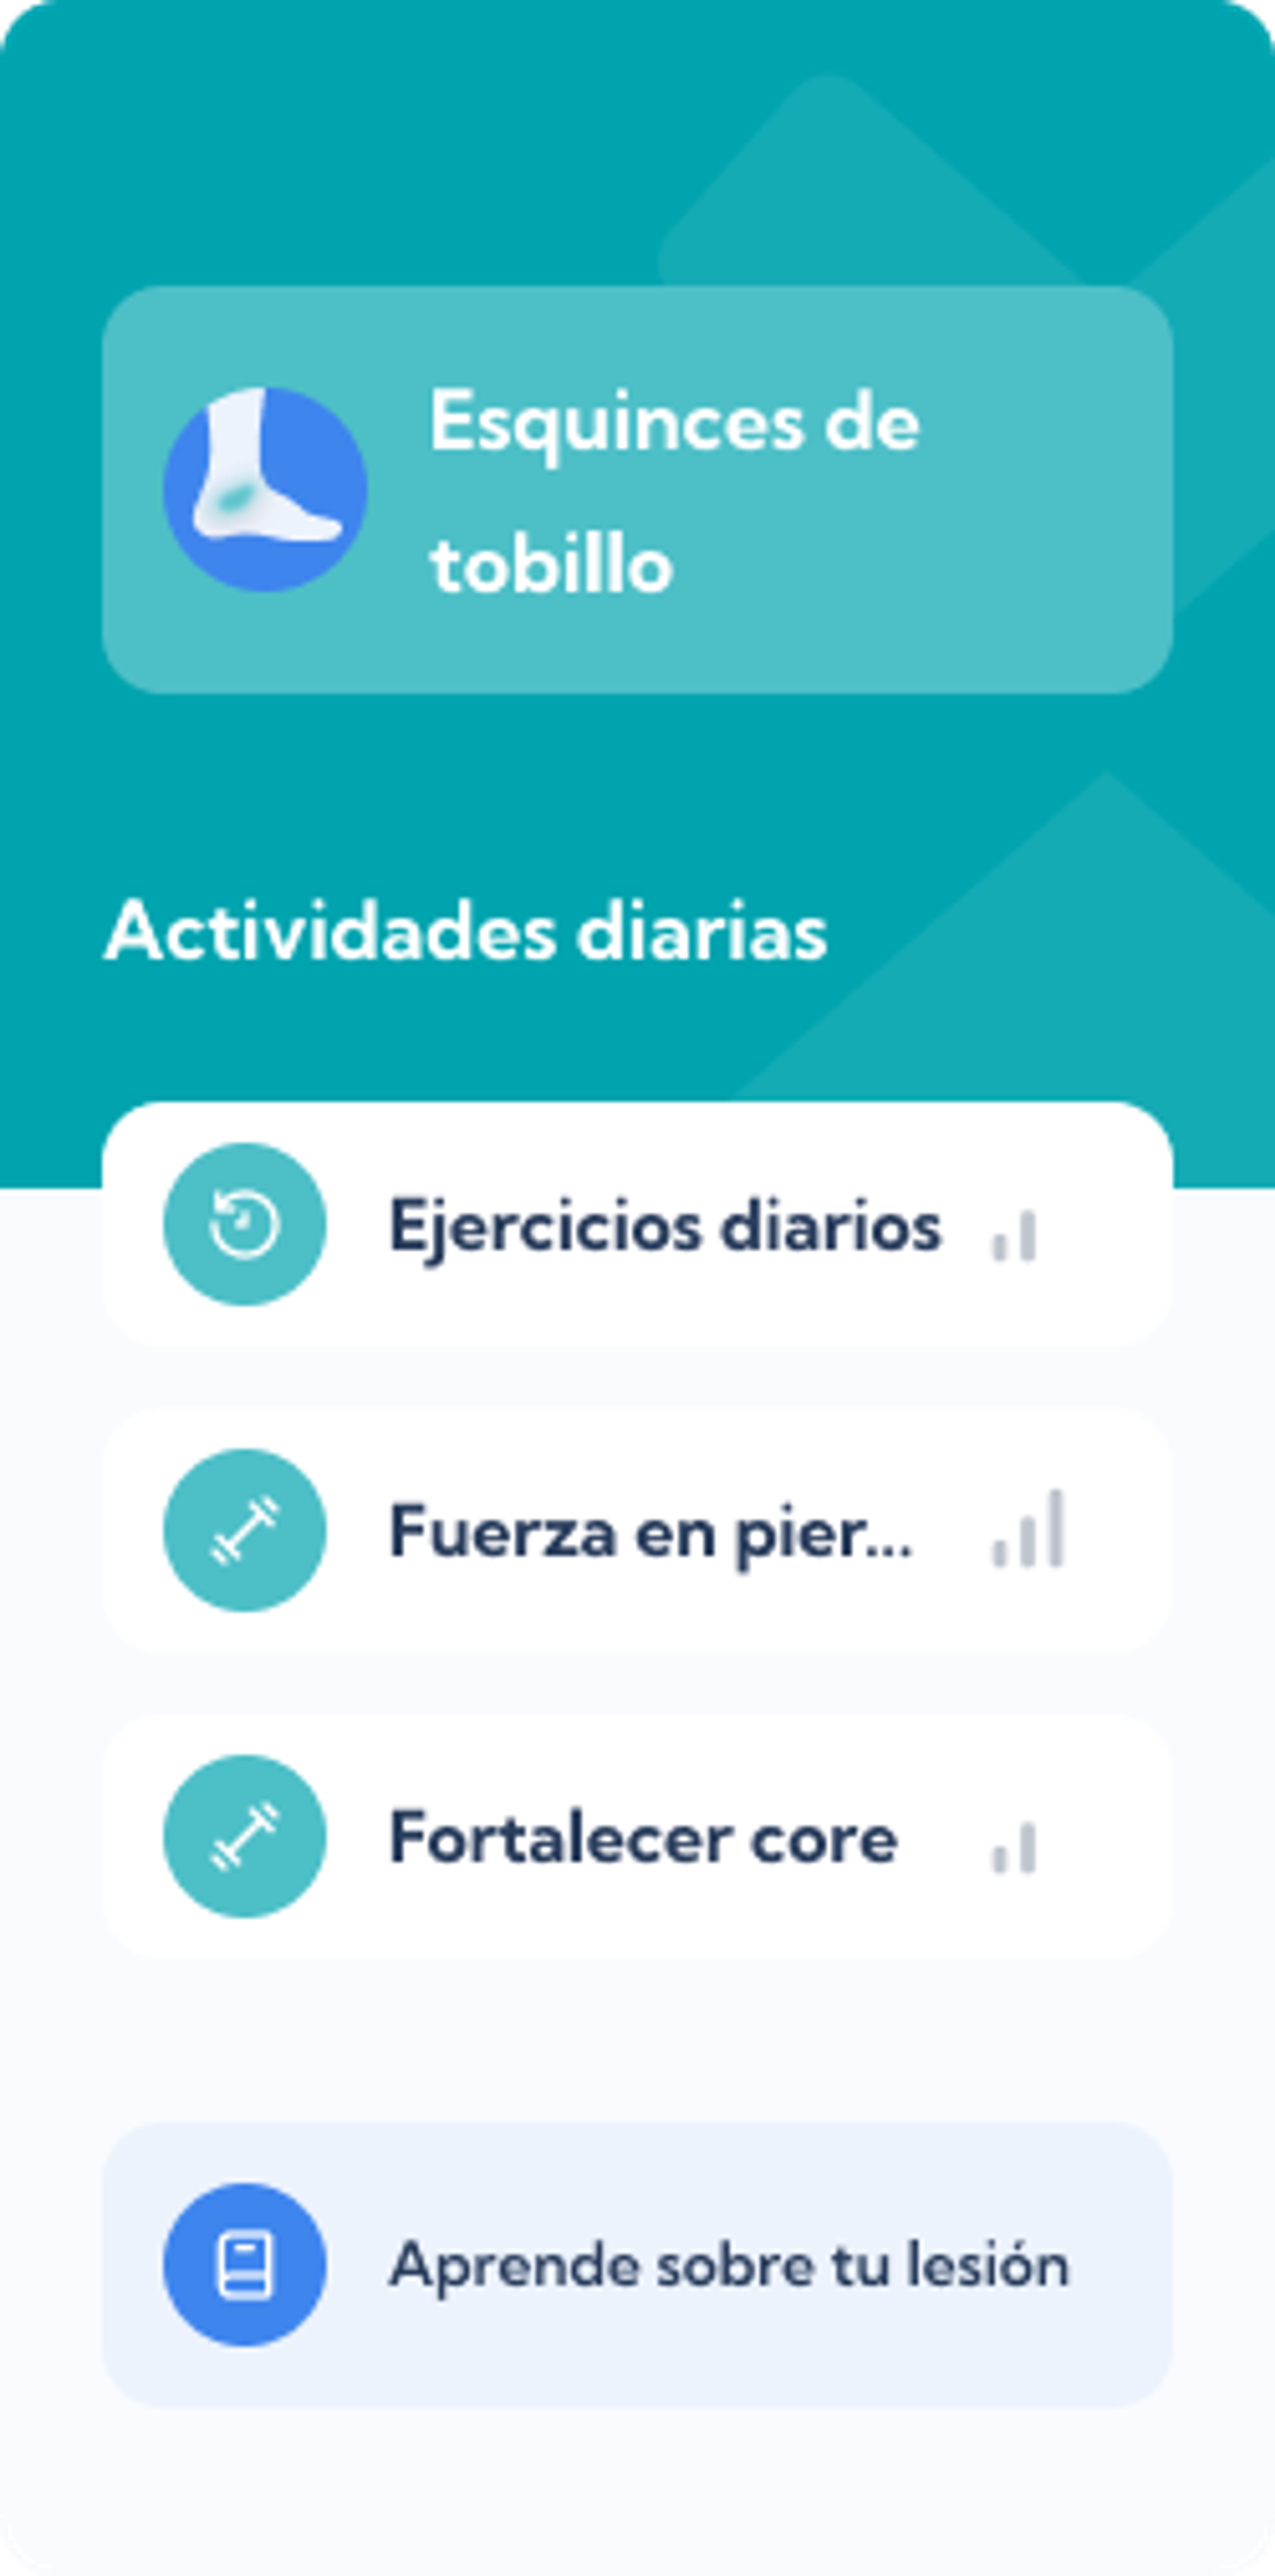 Plan de Esguinces de tobillo – Dashboard overview of the Exakt Health app